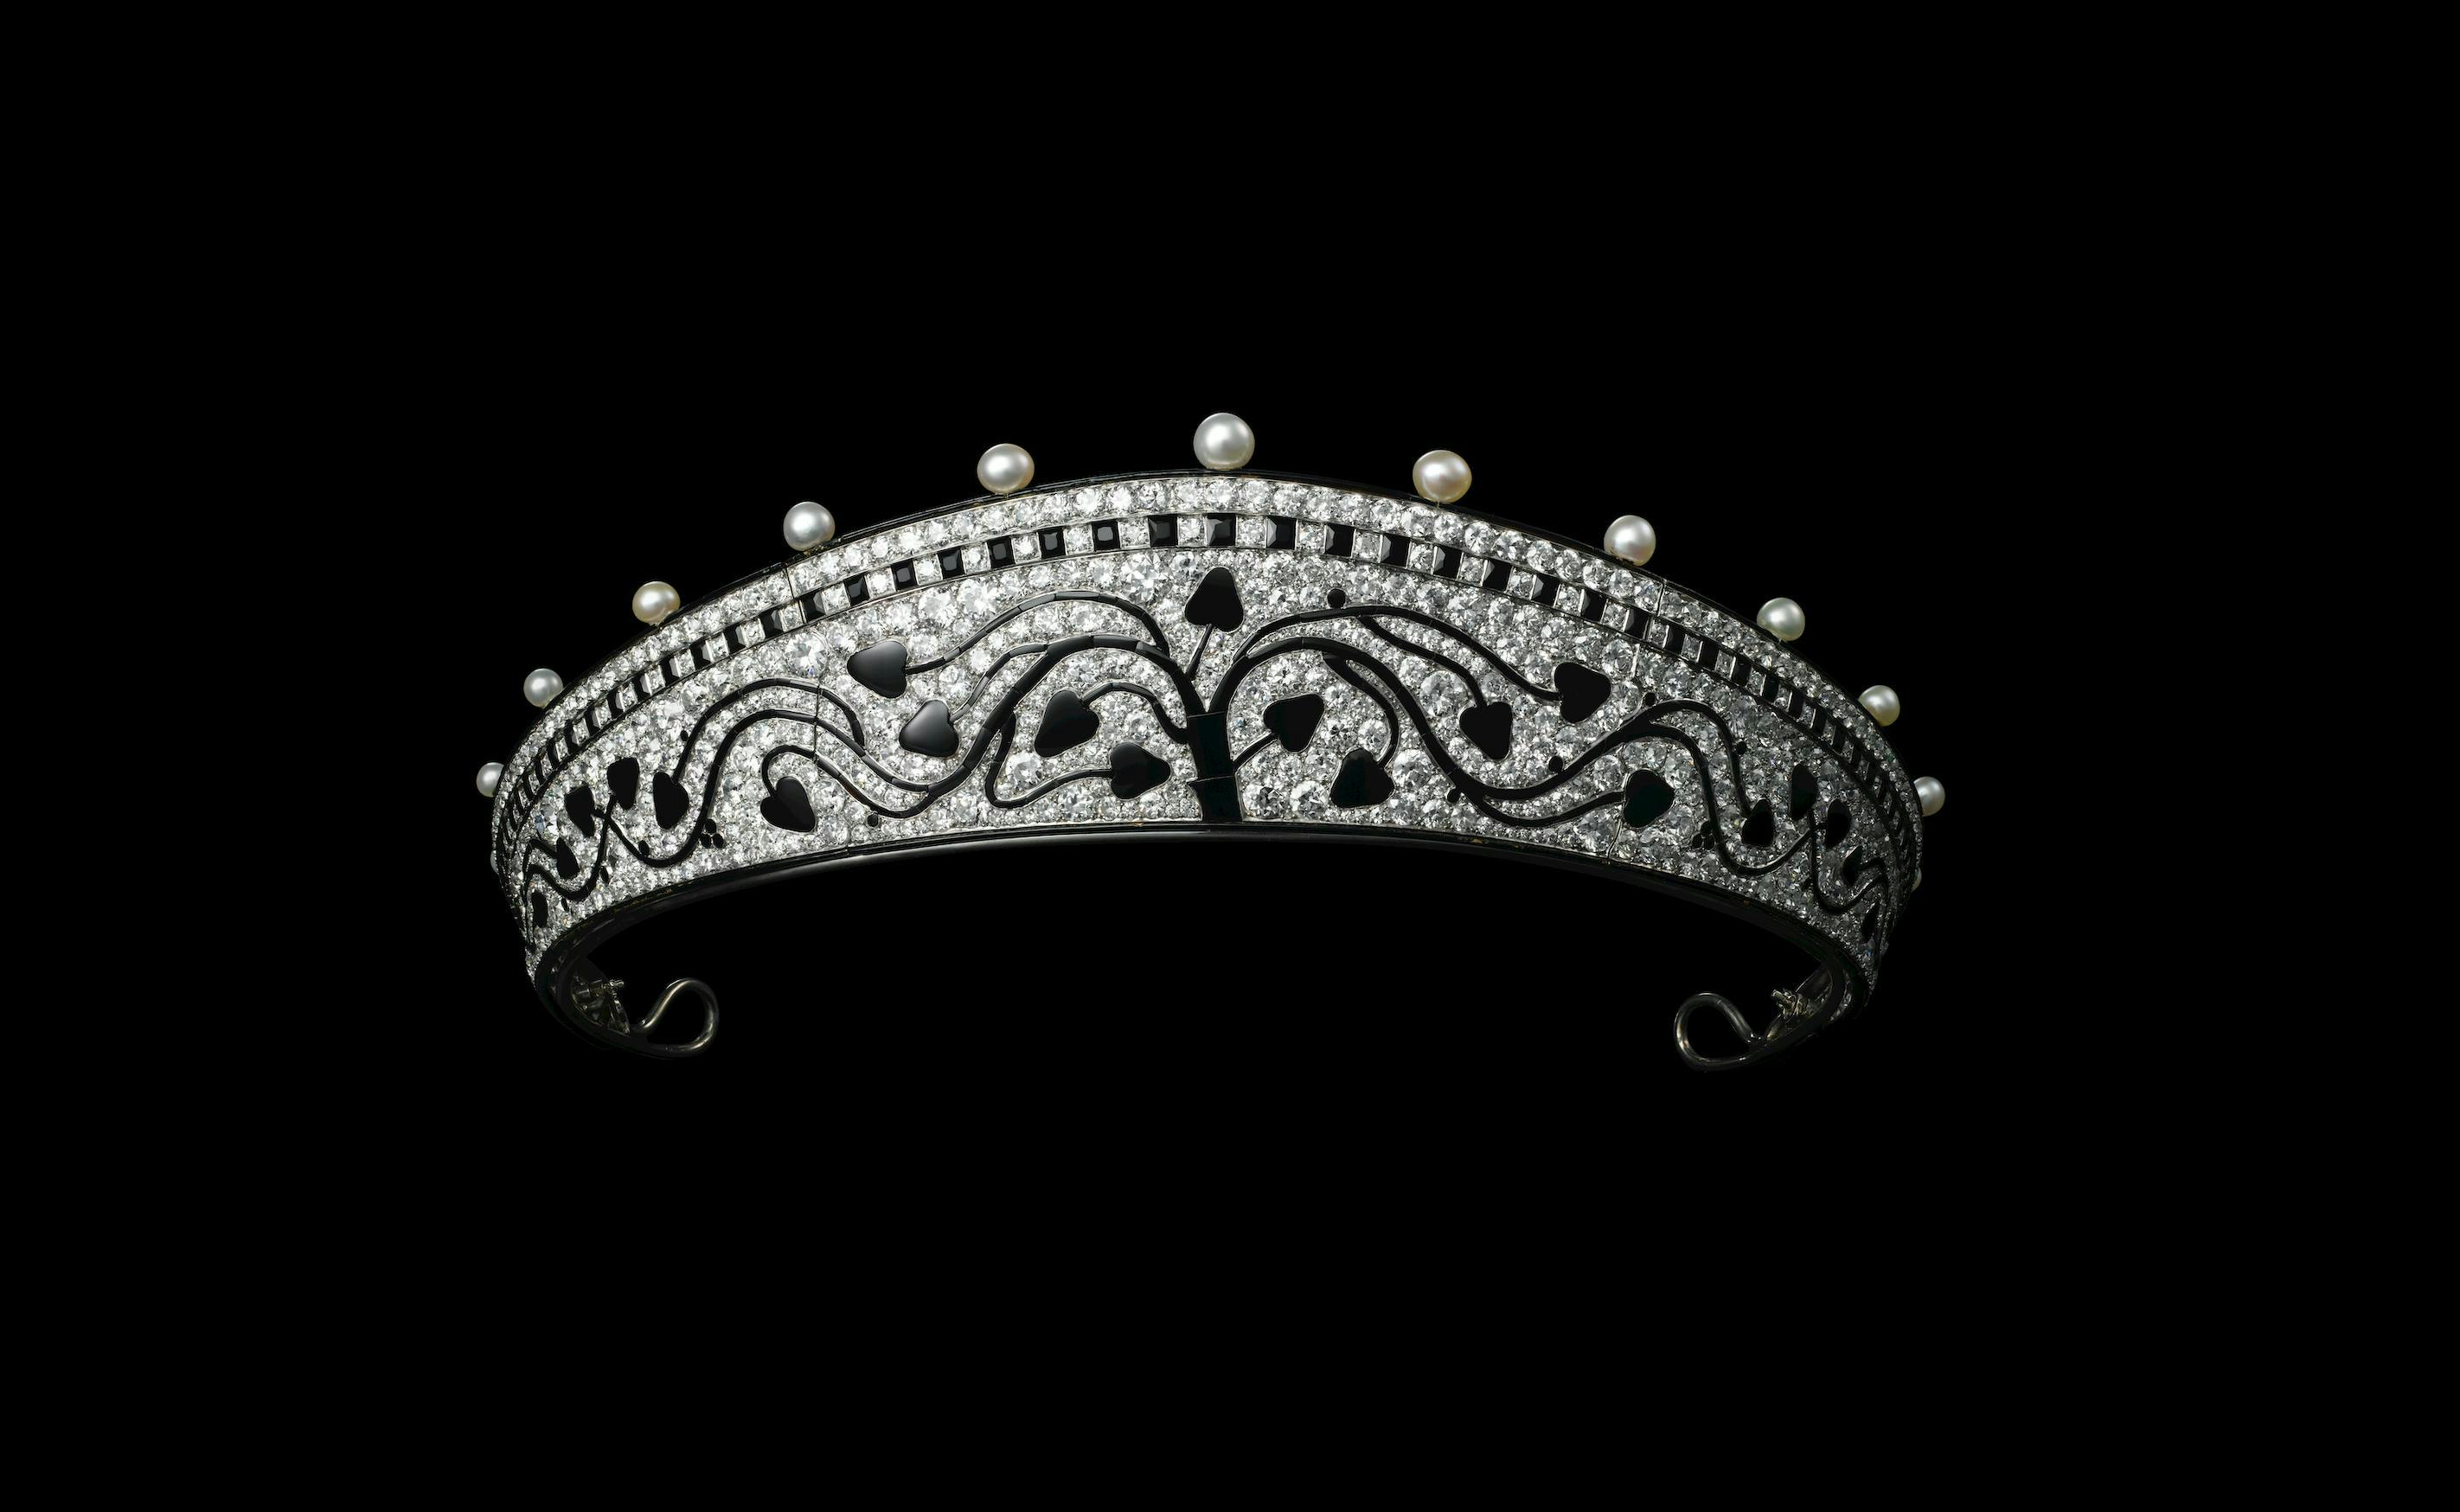 accessories jewelry tiara